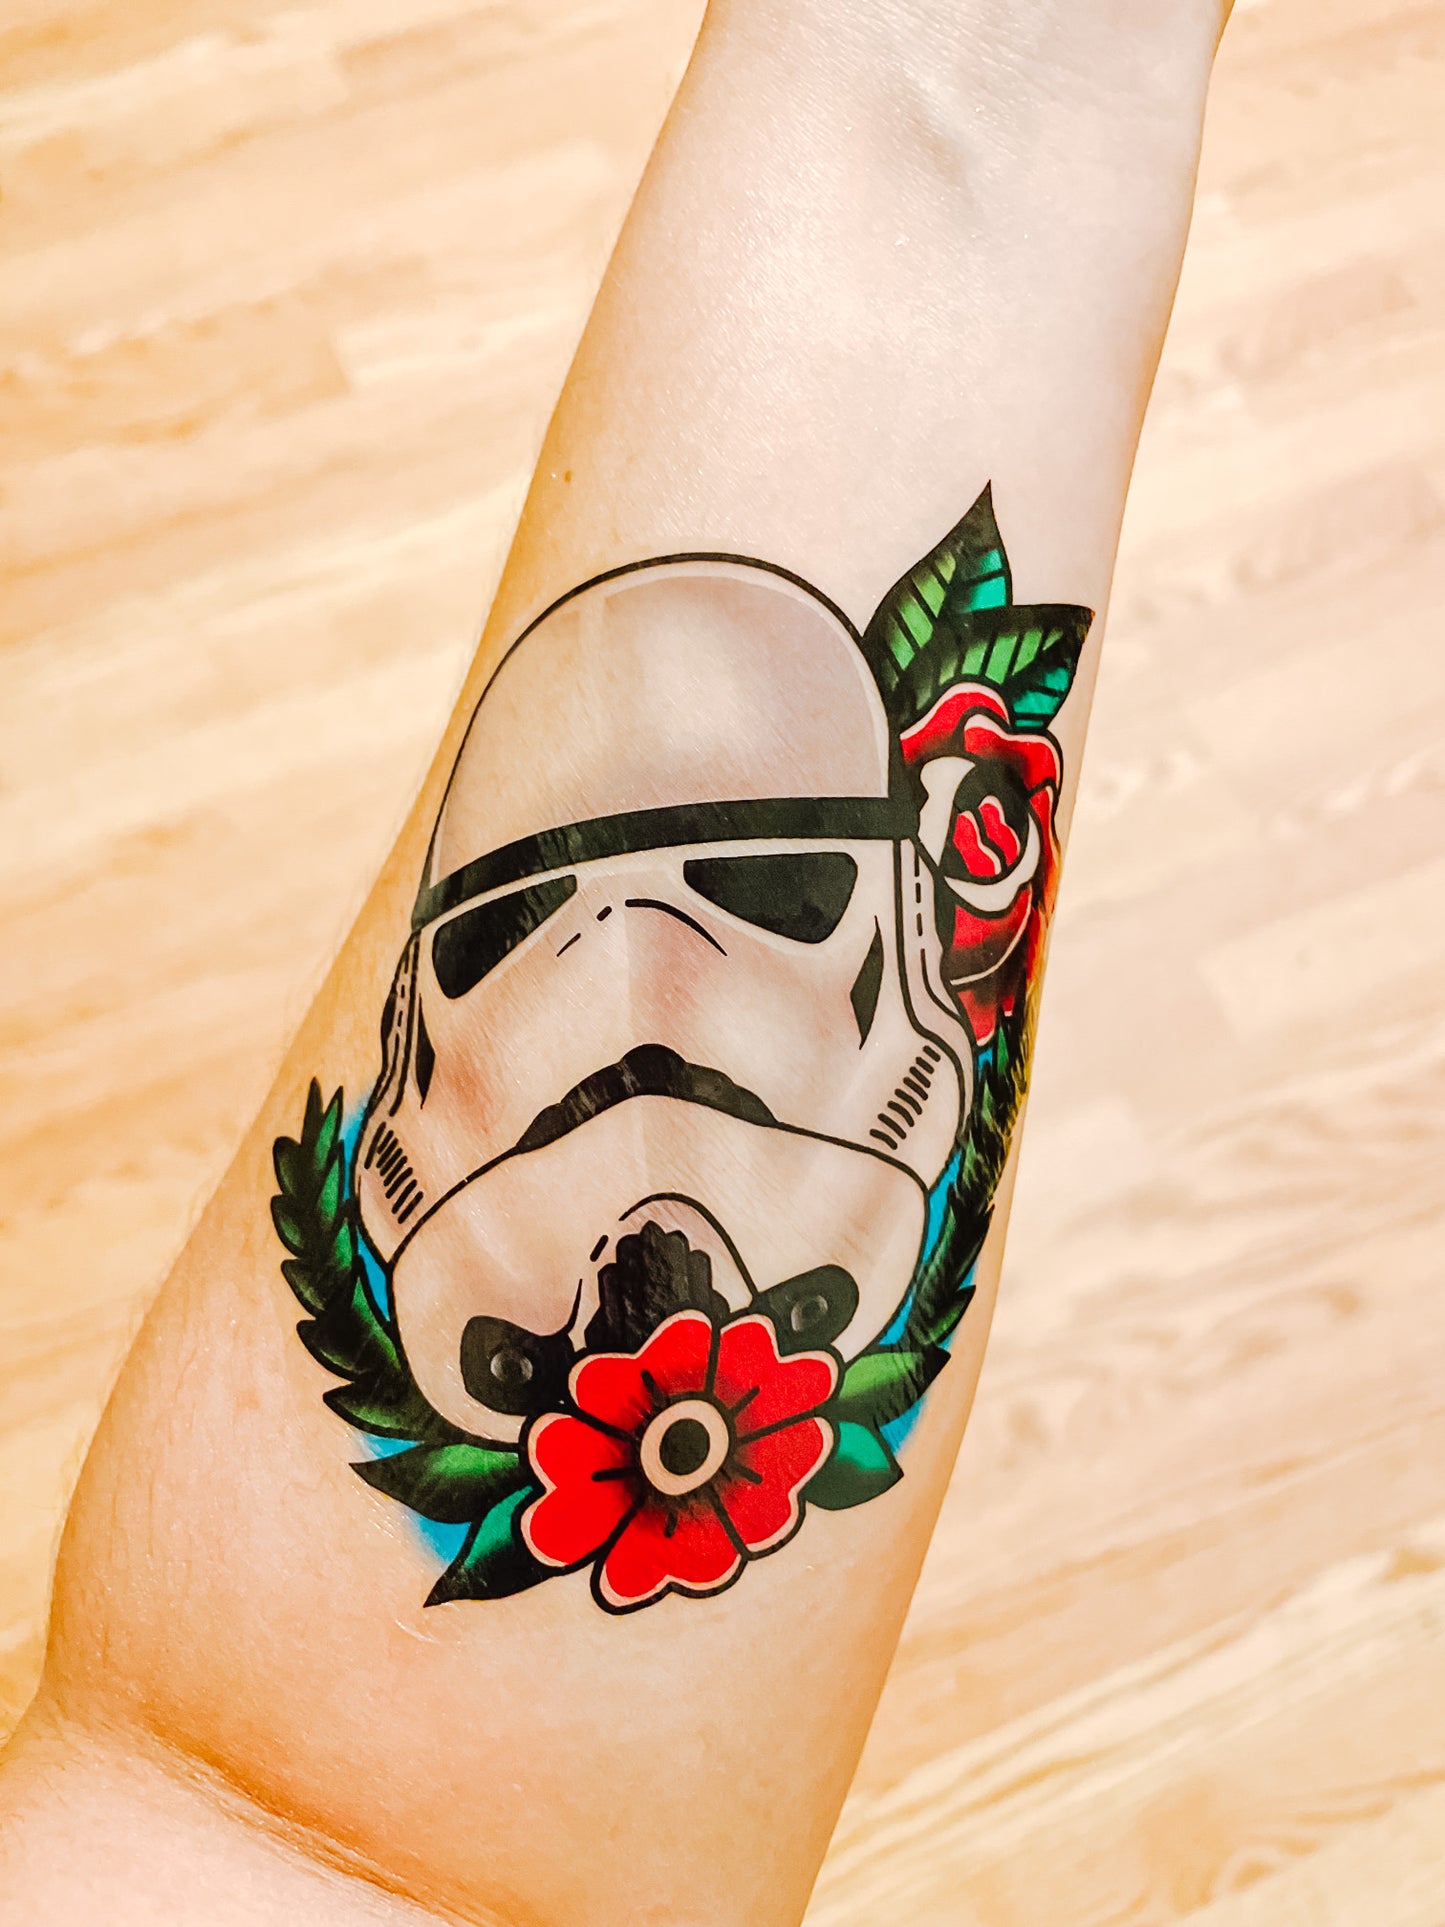 Tatted Trooper Half Sleeve tattoo